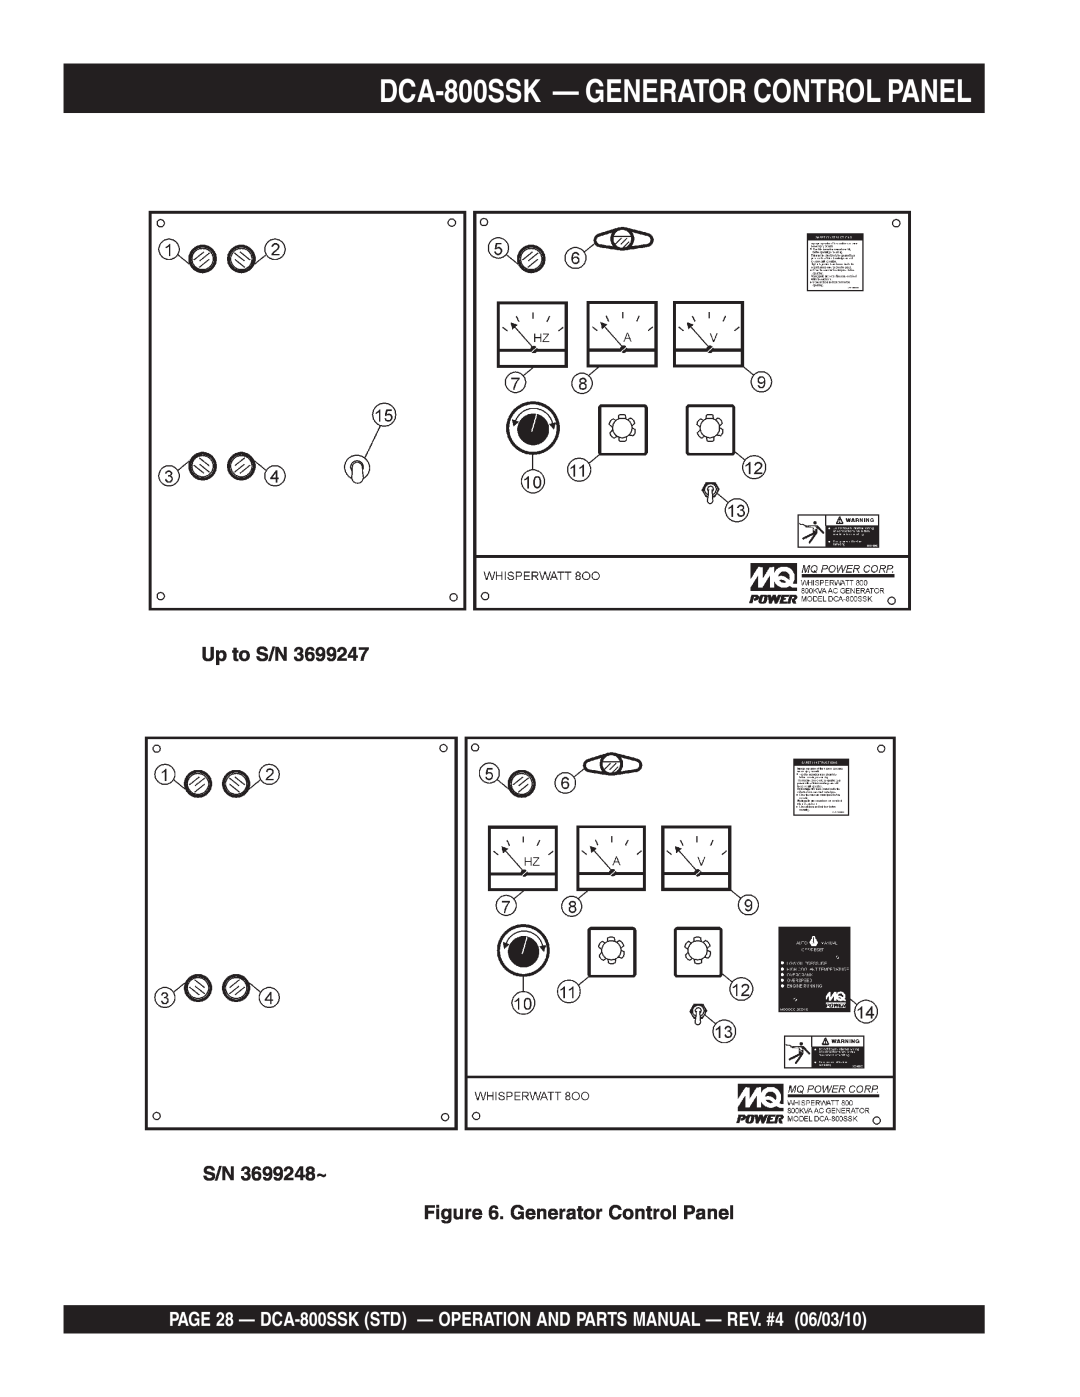 Multiquip operation manual DCA-800SSK - GENERATOR CONTROL PANEL, Up to S/N S/N 3699248~ . Generator Control Panel 